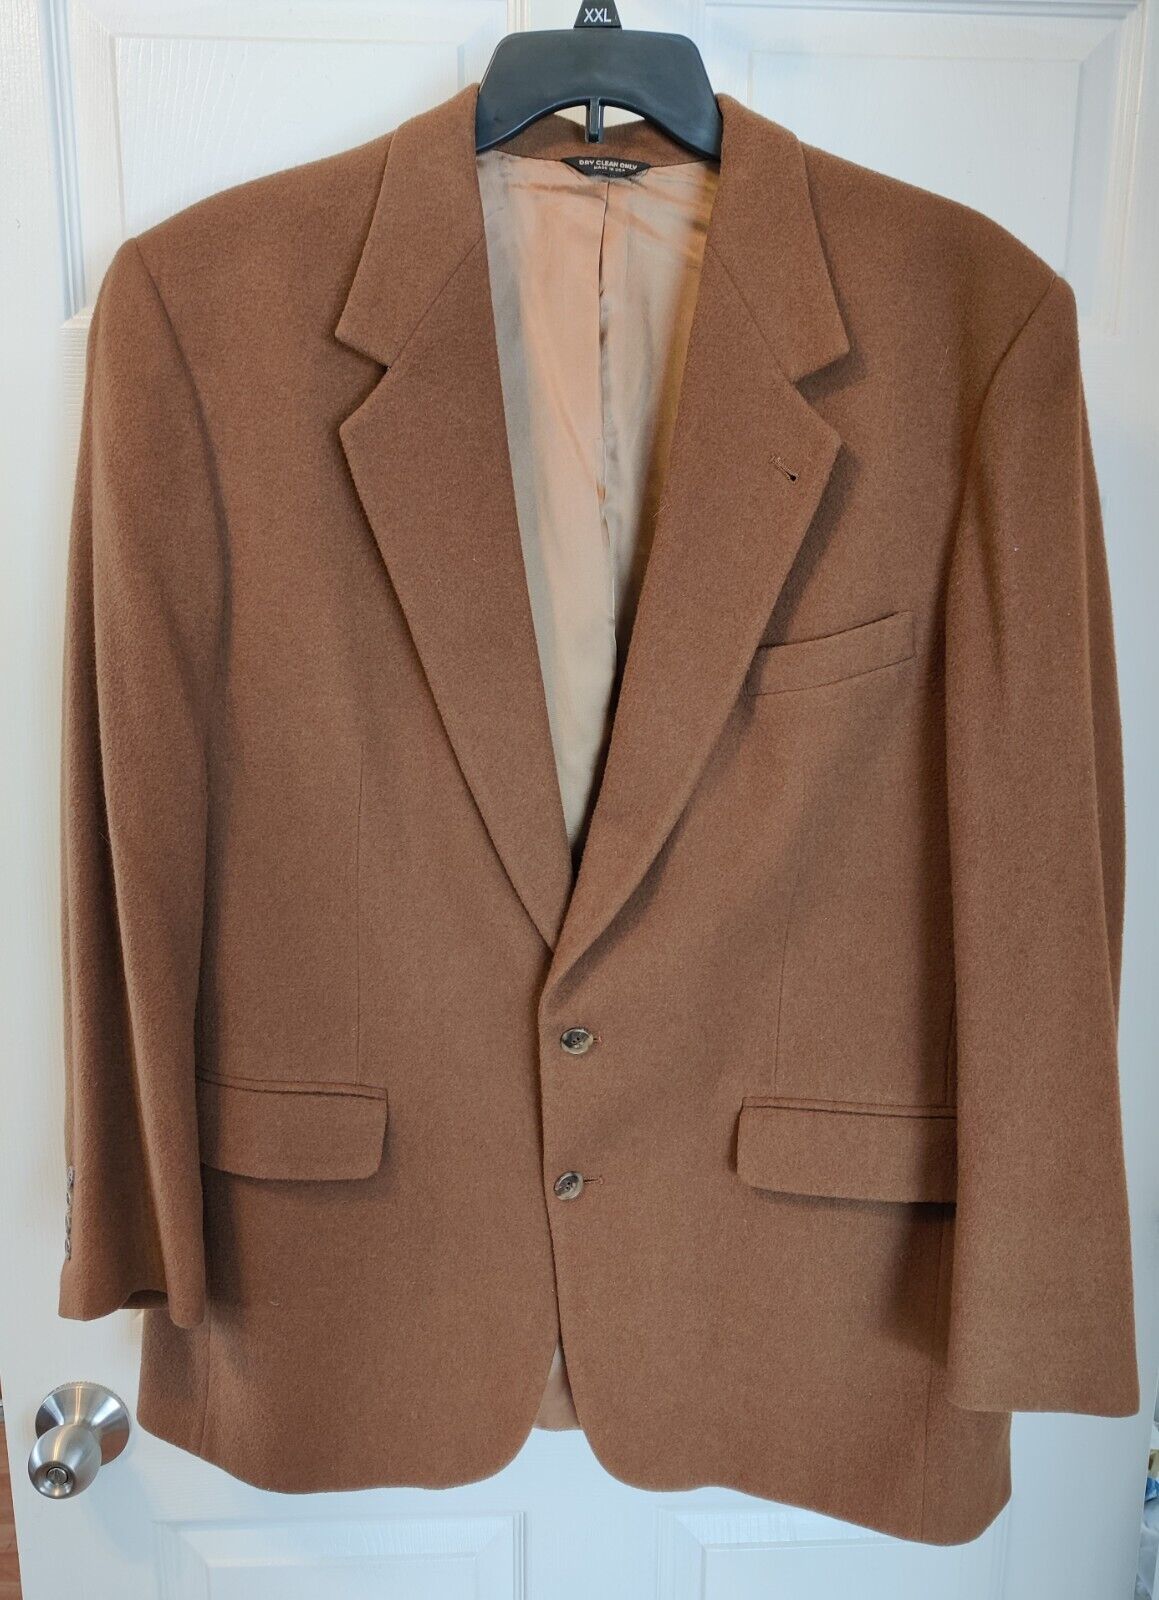 Primary image for Vtg Bill Blass 100% Camel Hair Men's Sport Coat Blazer Jacket-Union Made USA 48R